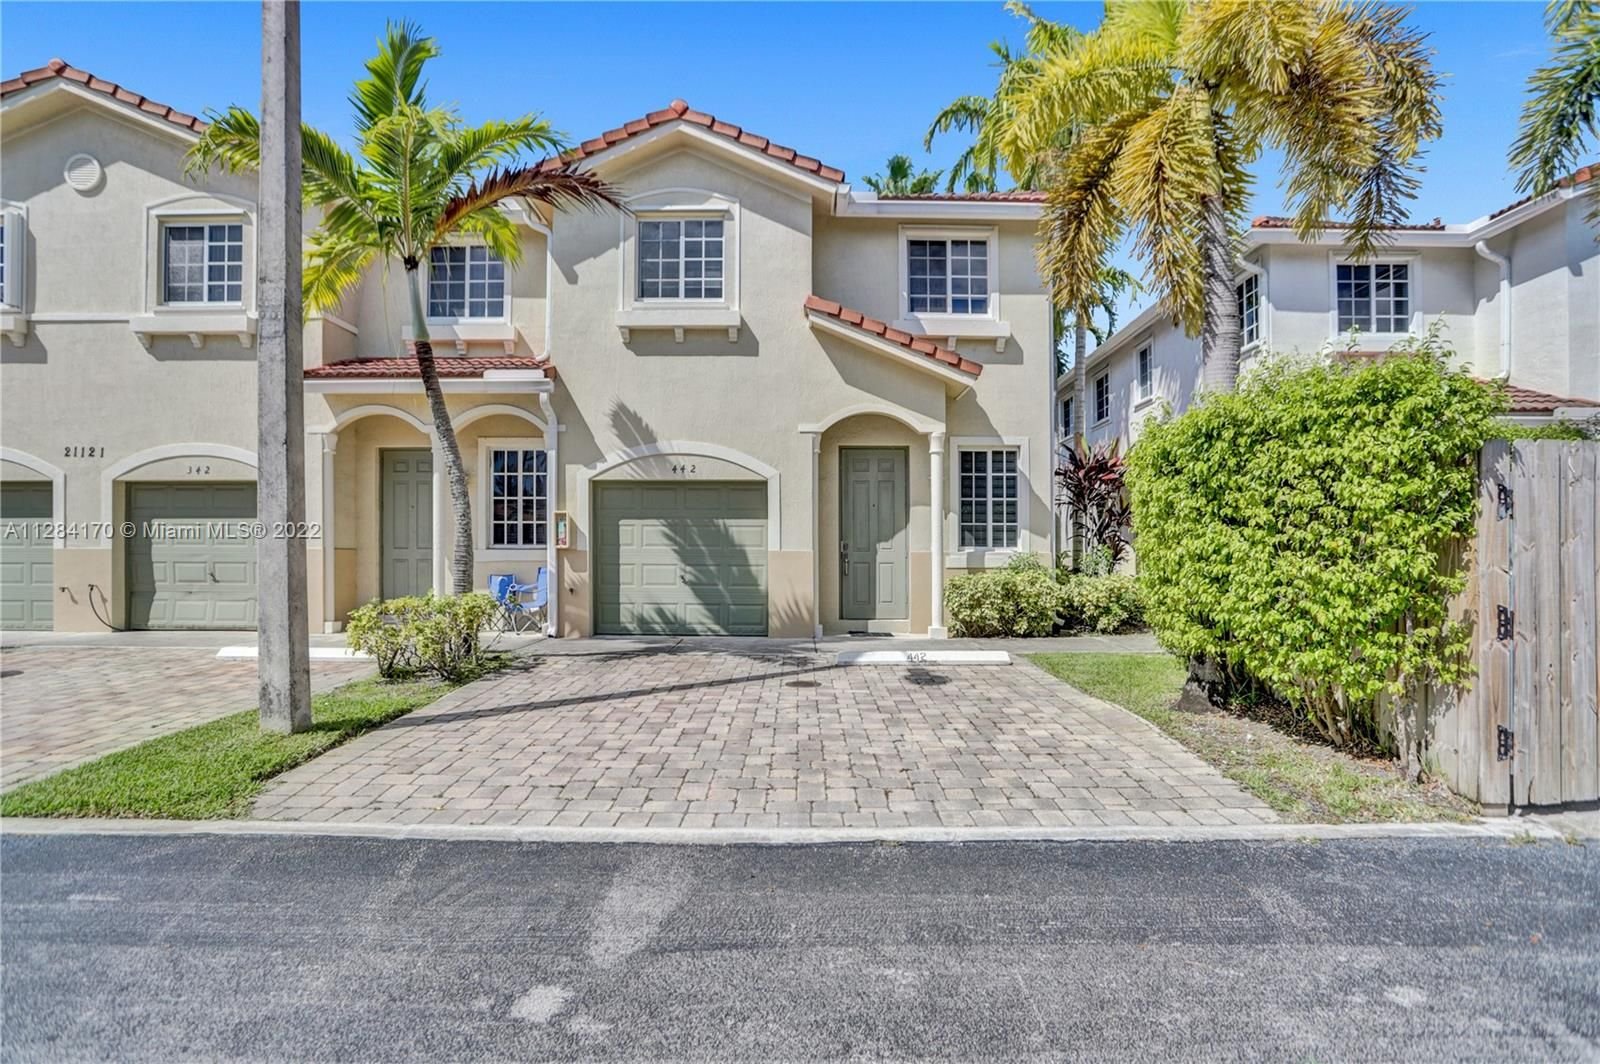 Real estate property located at 21121 14th Pl #442, Miami-Dade County, Miami Gardens, FL